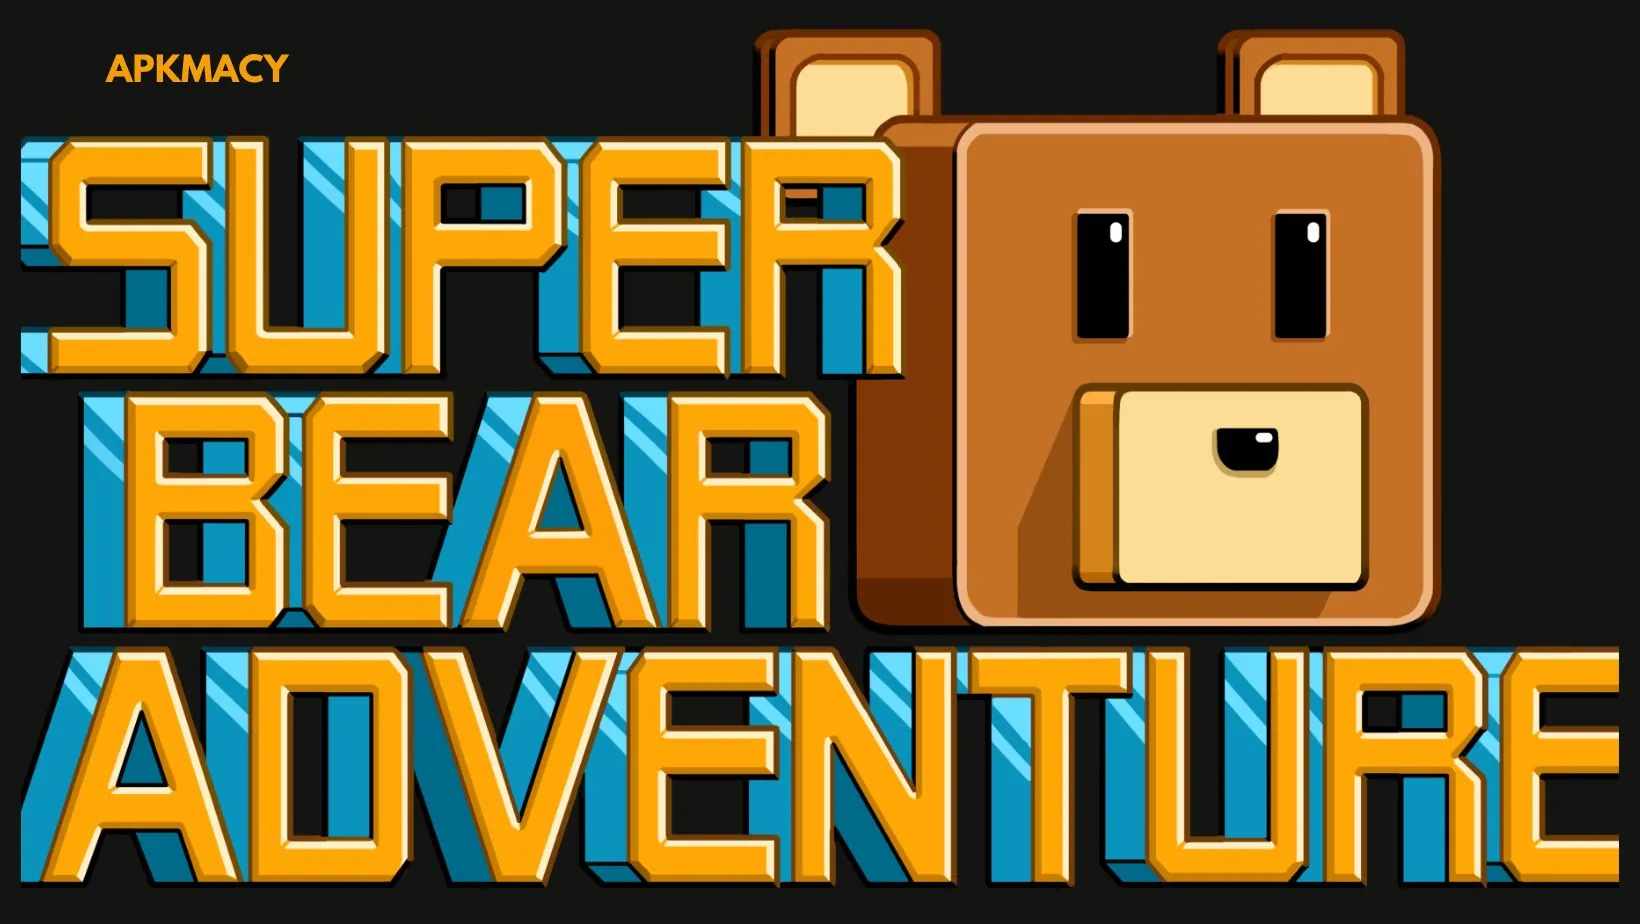 Super Bear Adventure MOD APK 10.5.1 - (All Unlocked) 2023